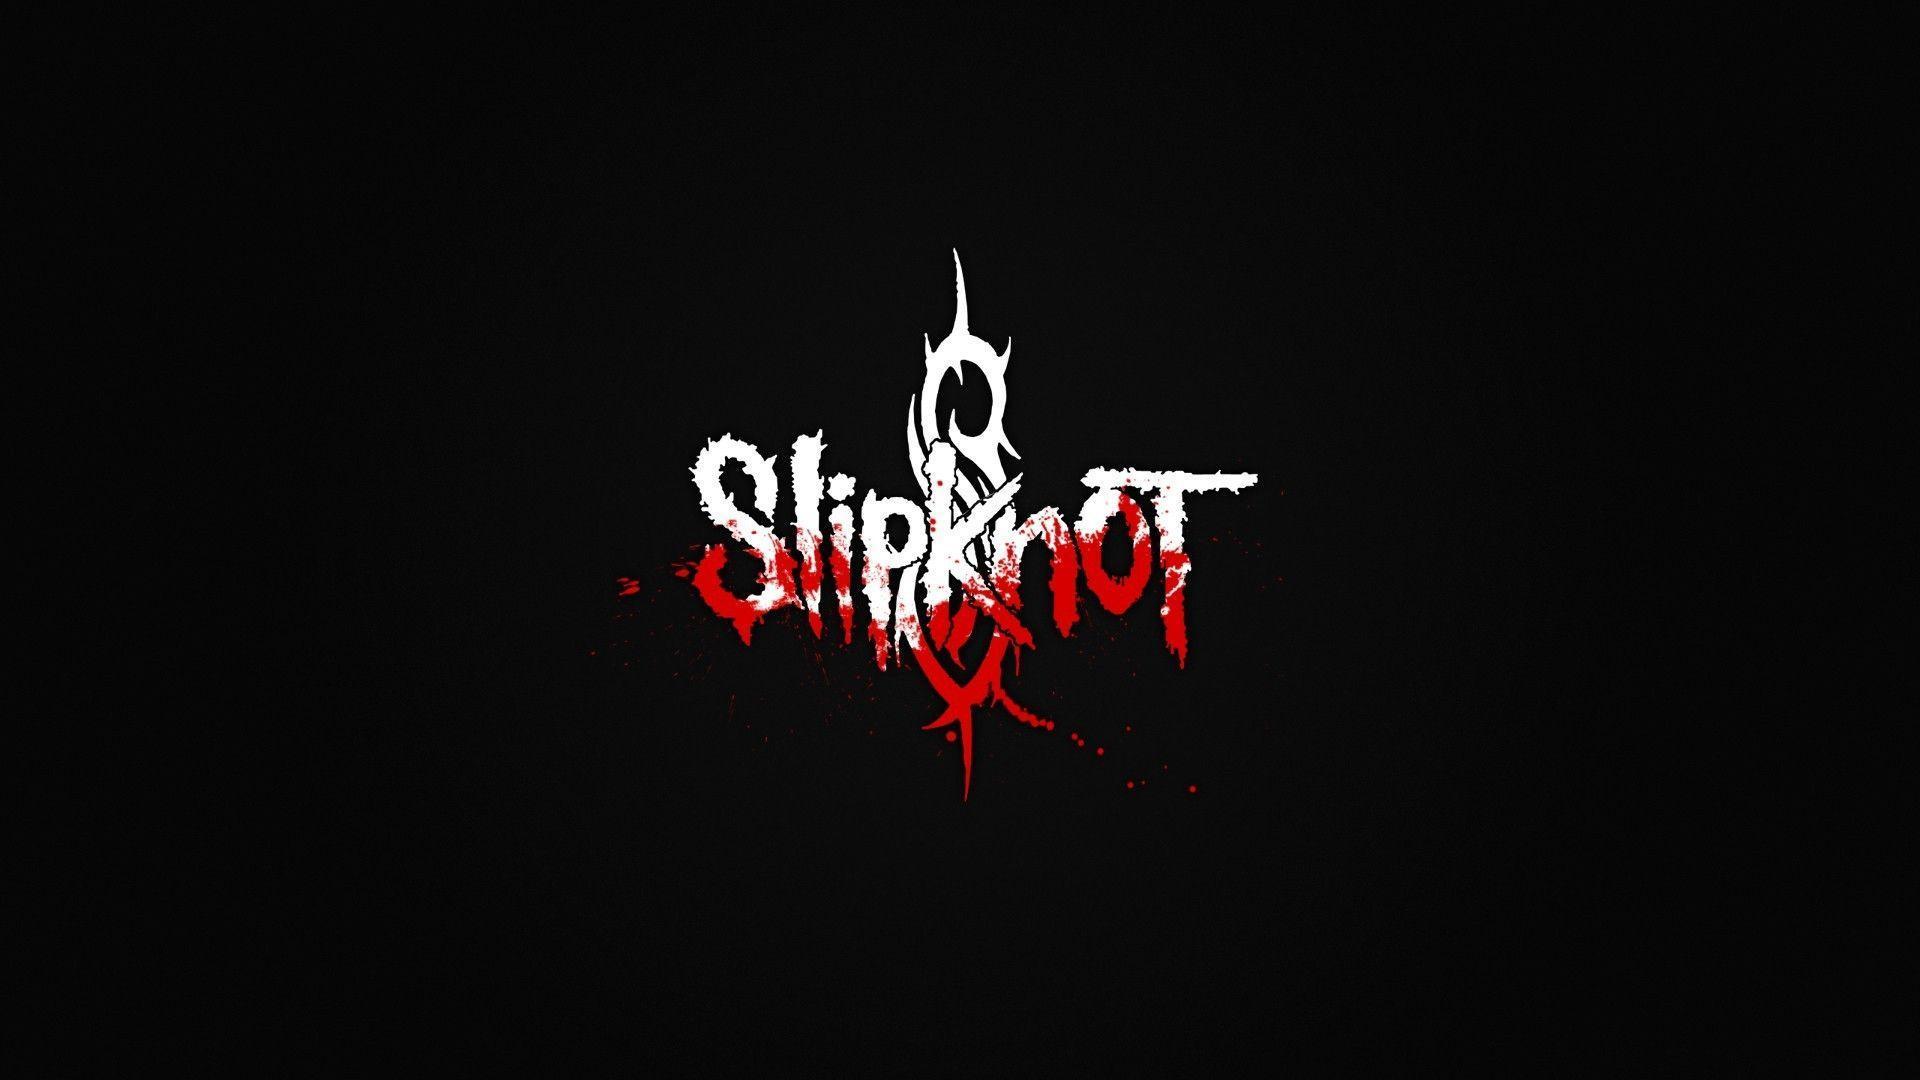 Slipknot Wallpaper 25416 1920x1080 px HDWallSource